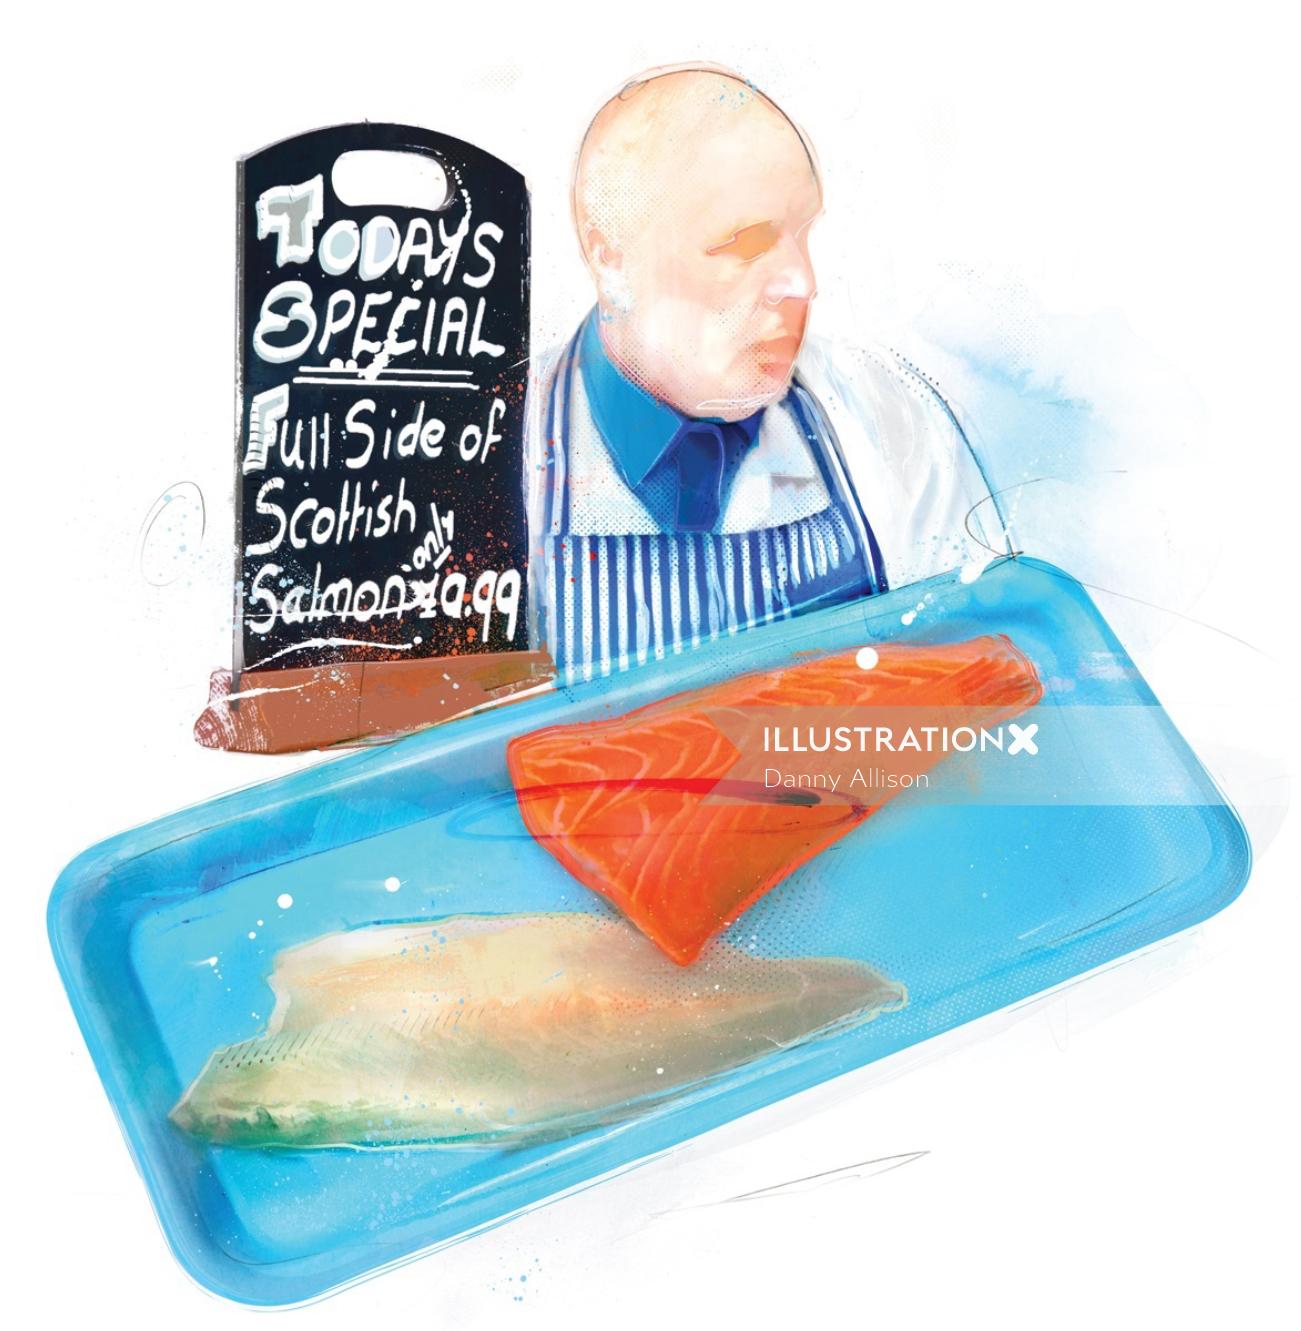 food, fish, portrait, food illustration, fillet, salmon, food illustrator, waitrose, fishmonger,